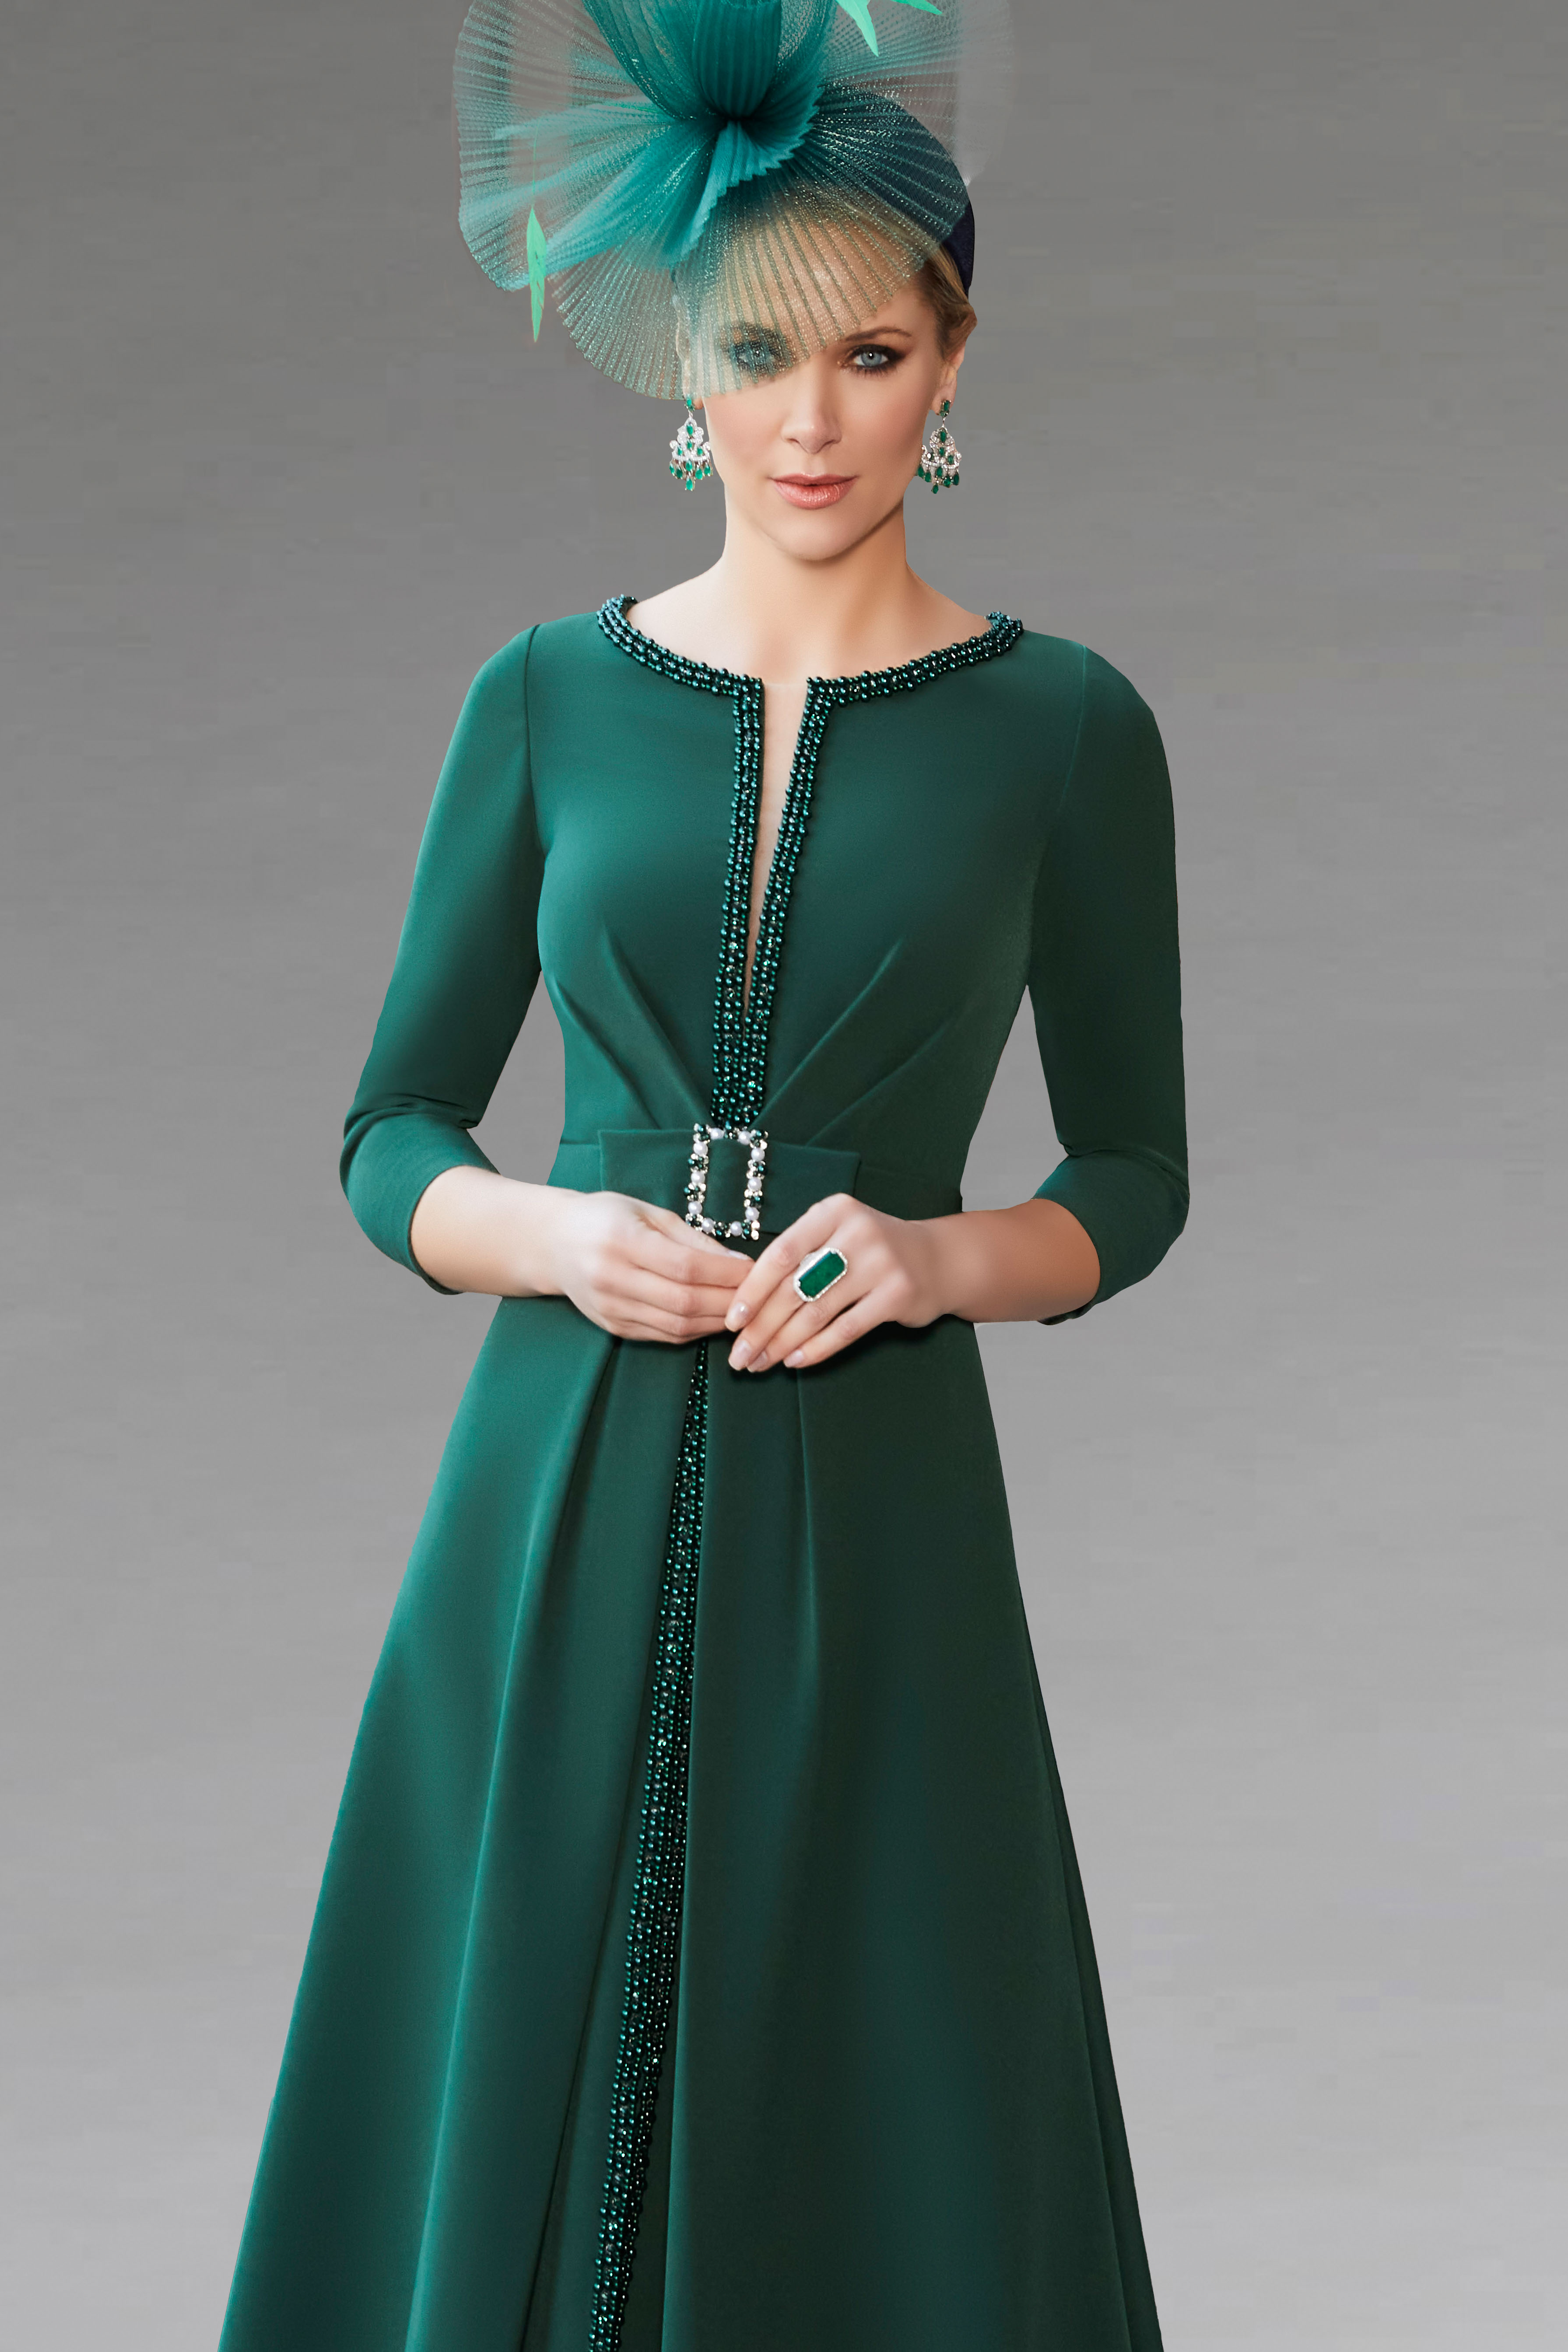 Woman Dress Coat Fashion Style Catalog Stock Photo - Image of bright,  fashion: 65910502